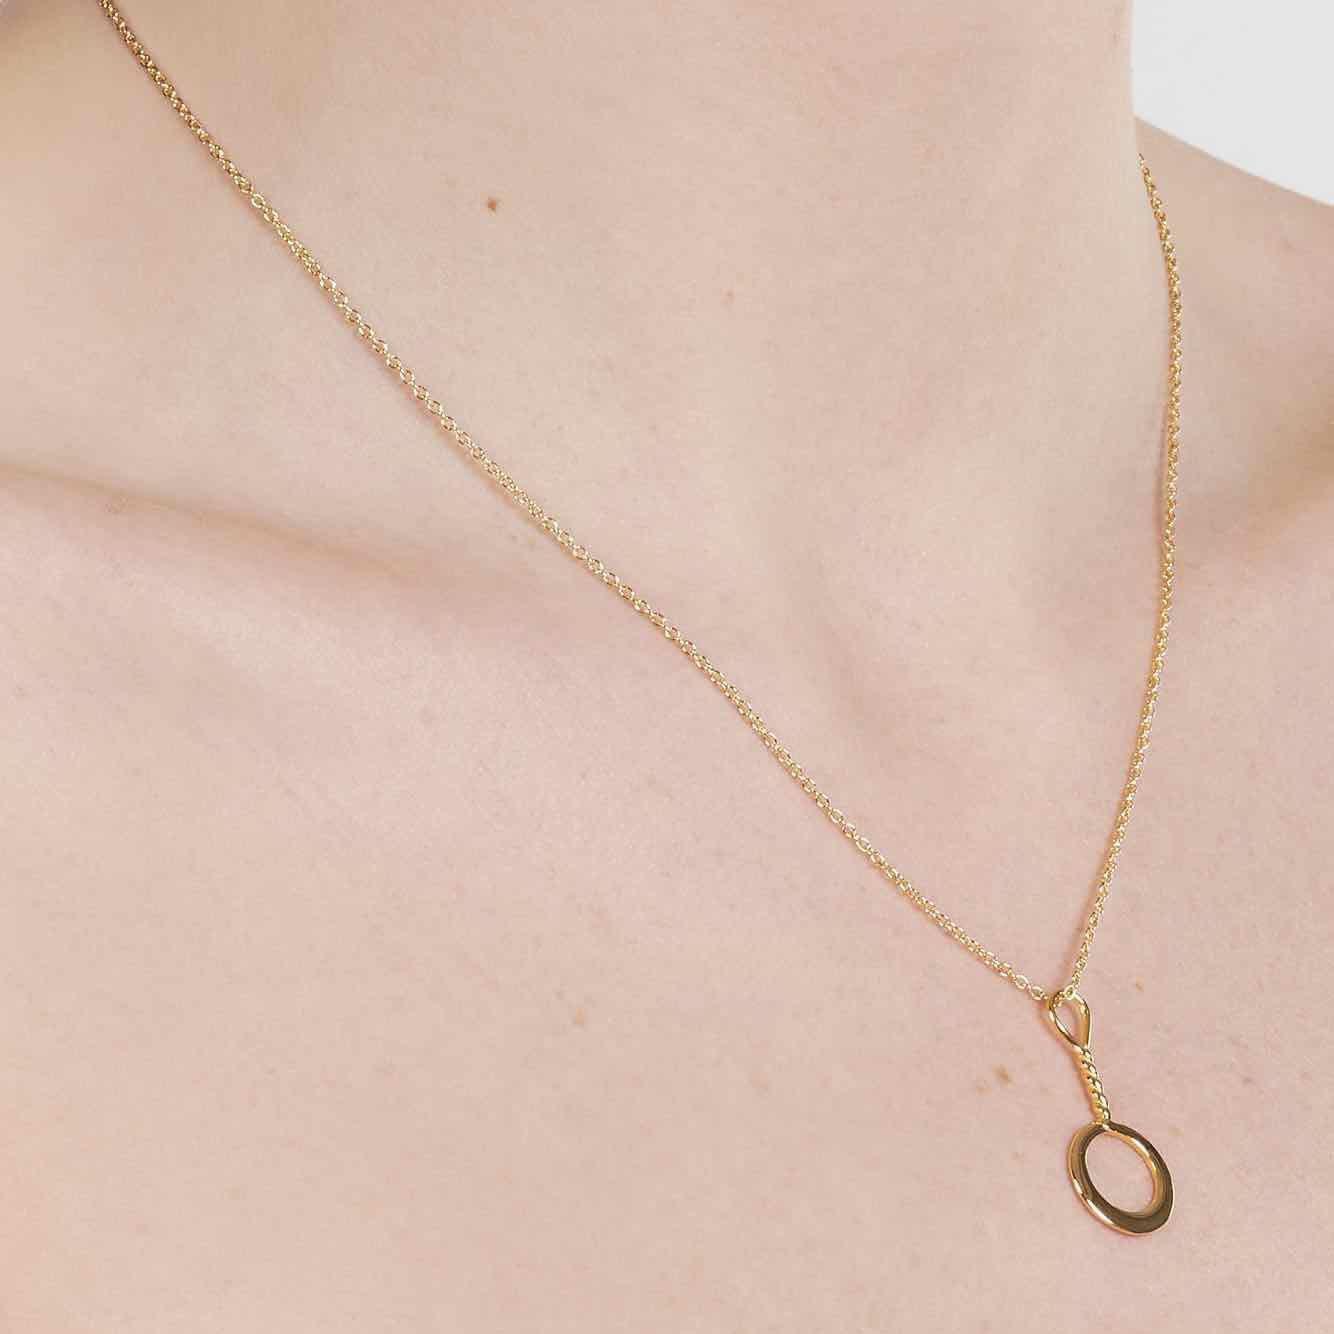 Soldiser Goddess Night Gold Necklace on model